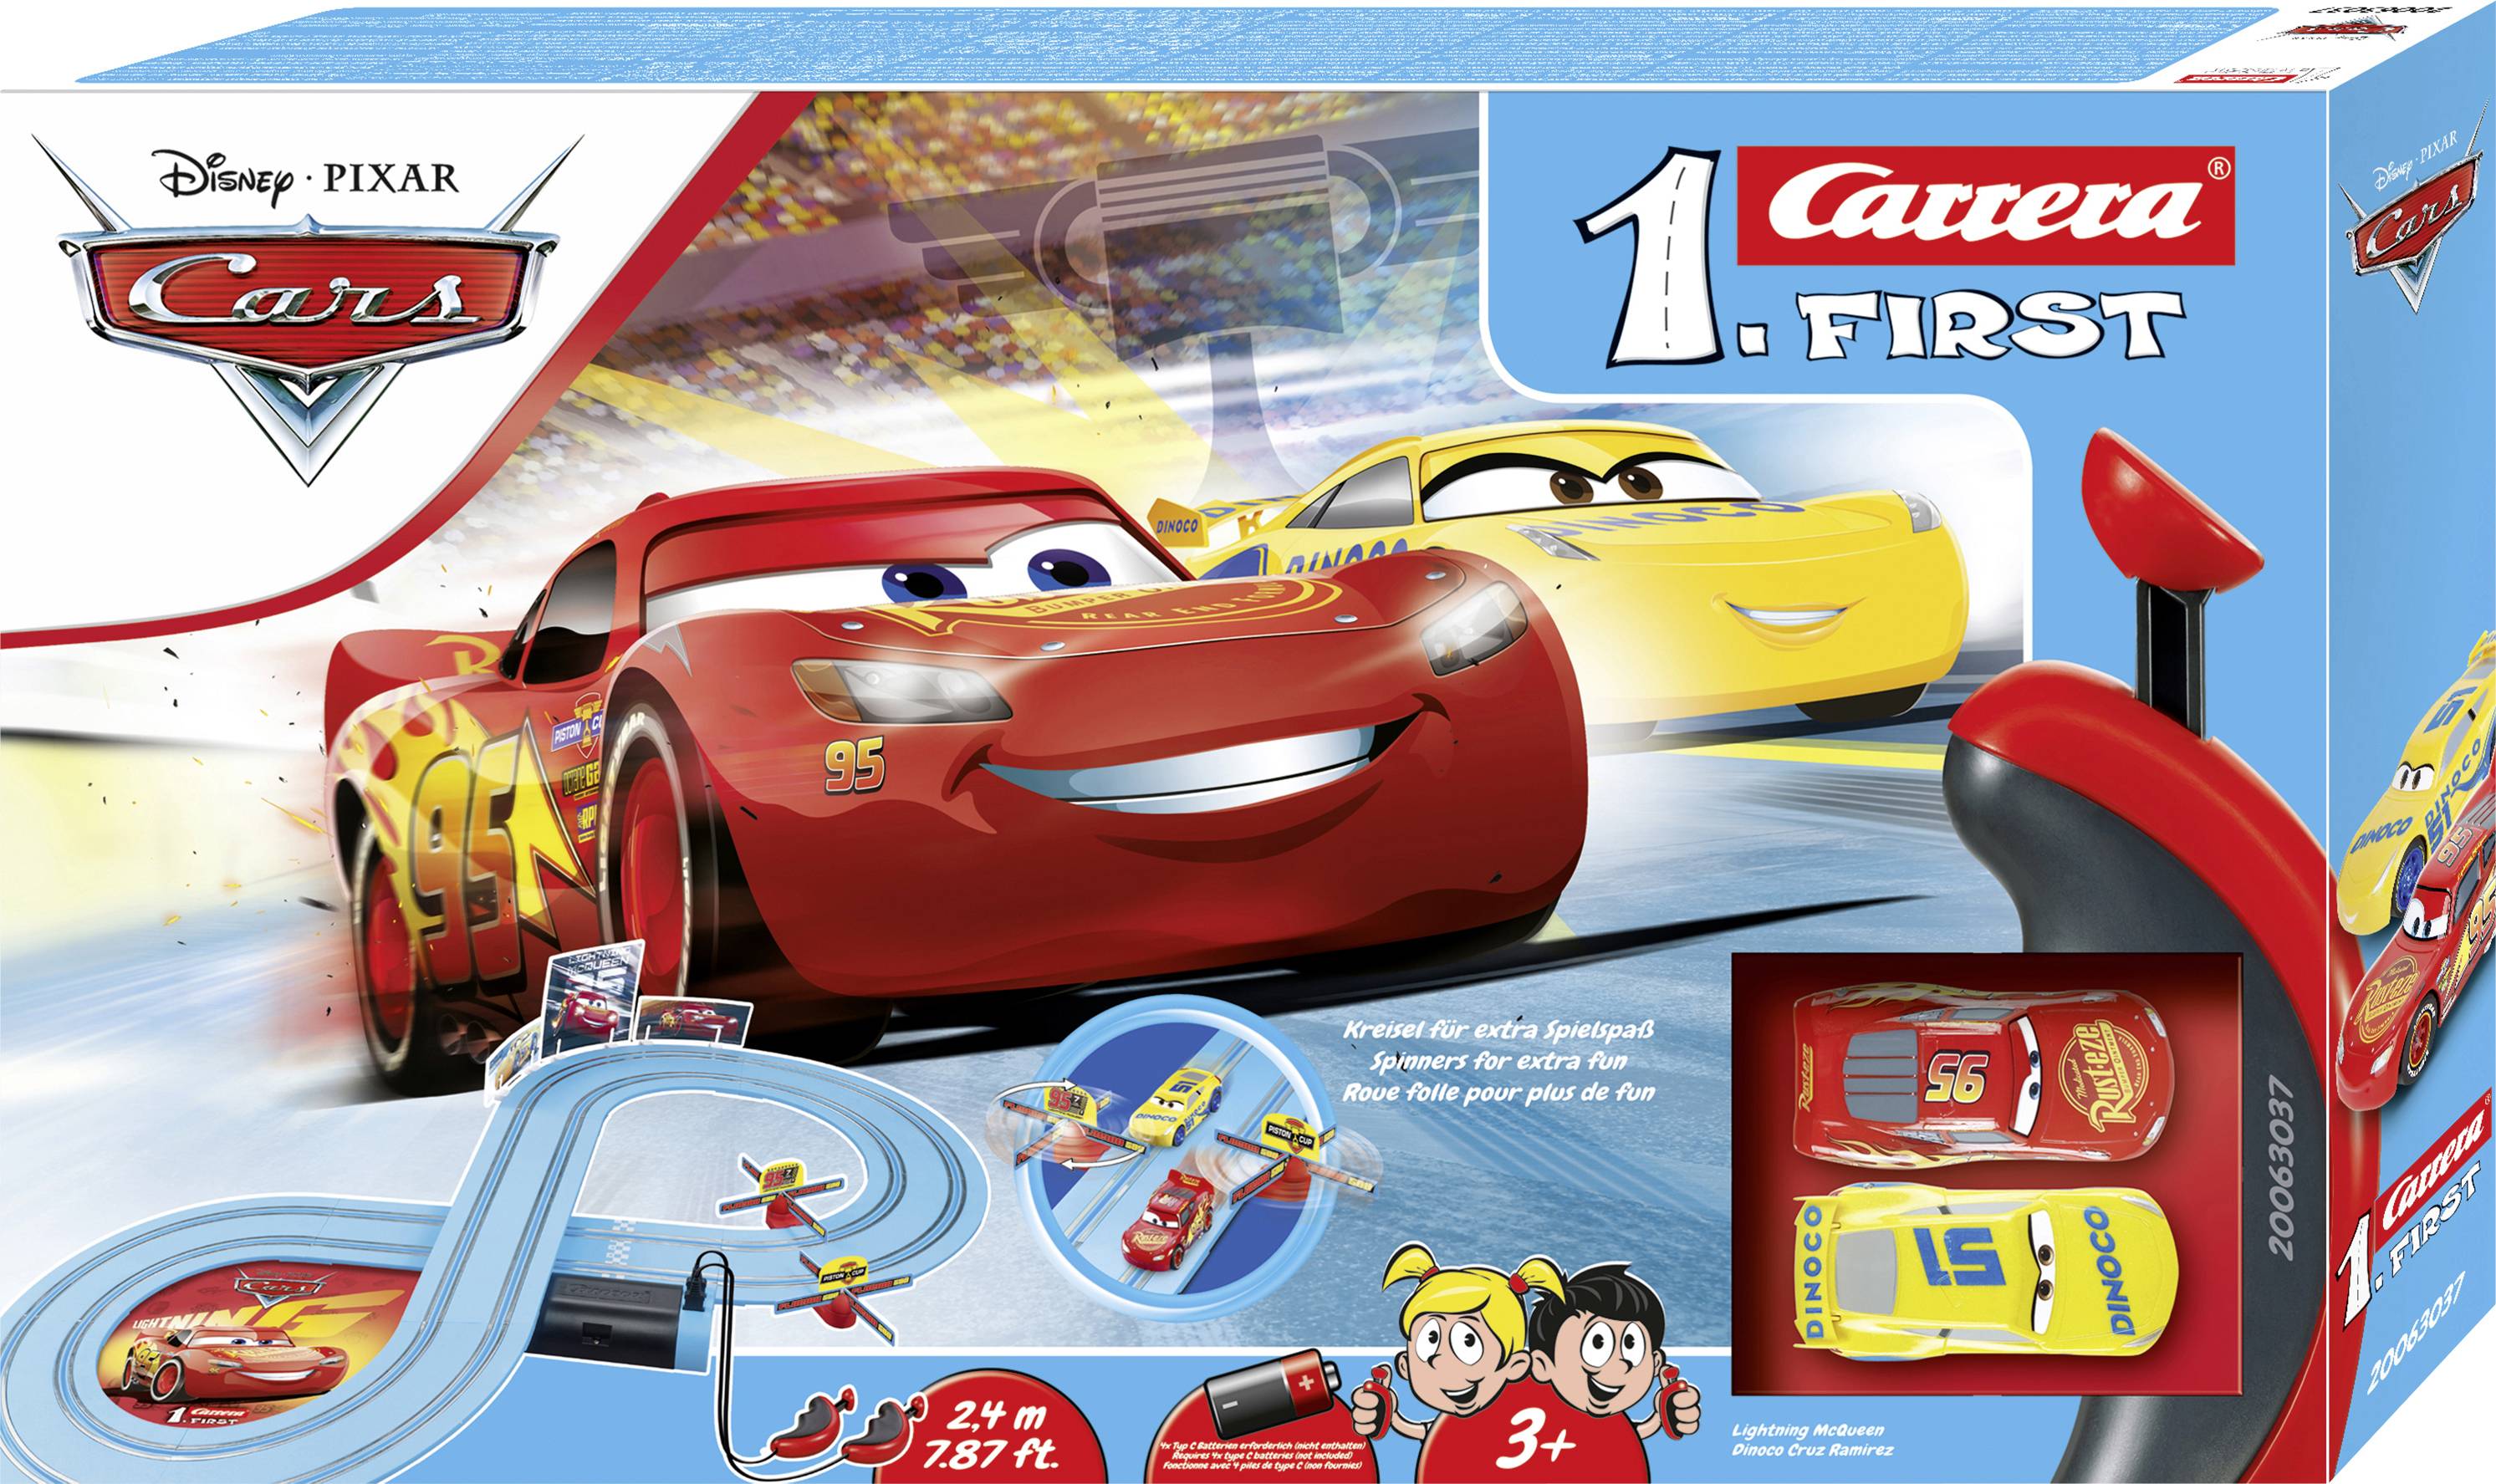 Carrera 20063037 First Disney Pixar Cars - Race of Friends Starter kit |  